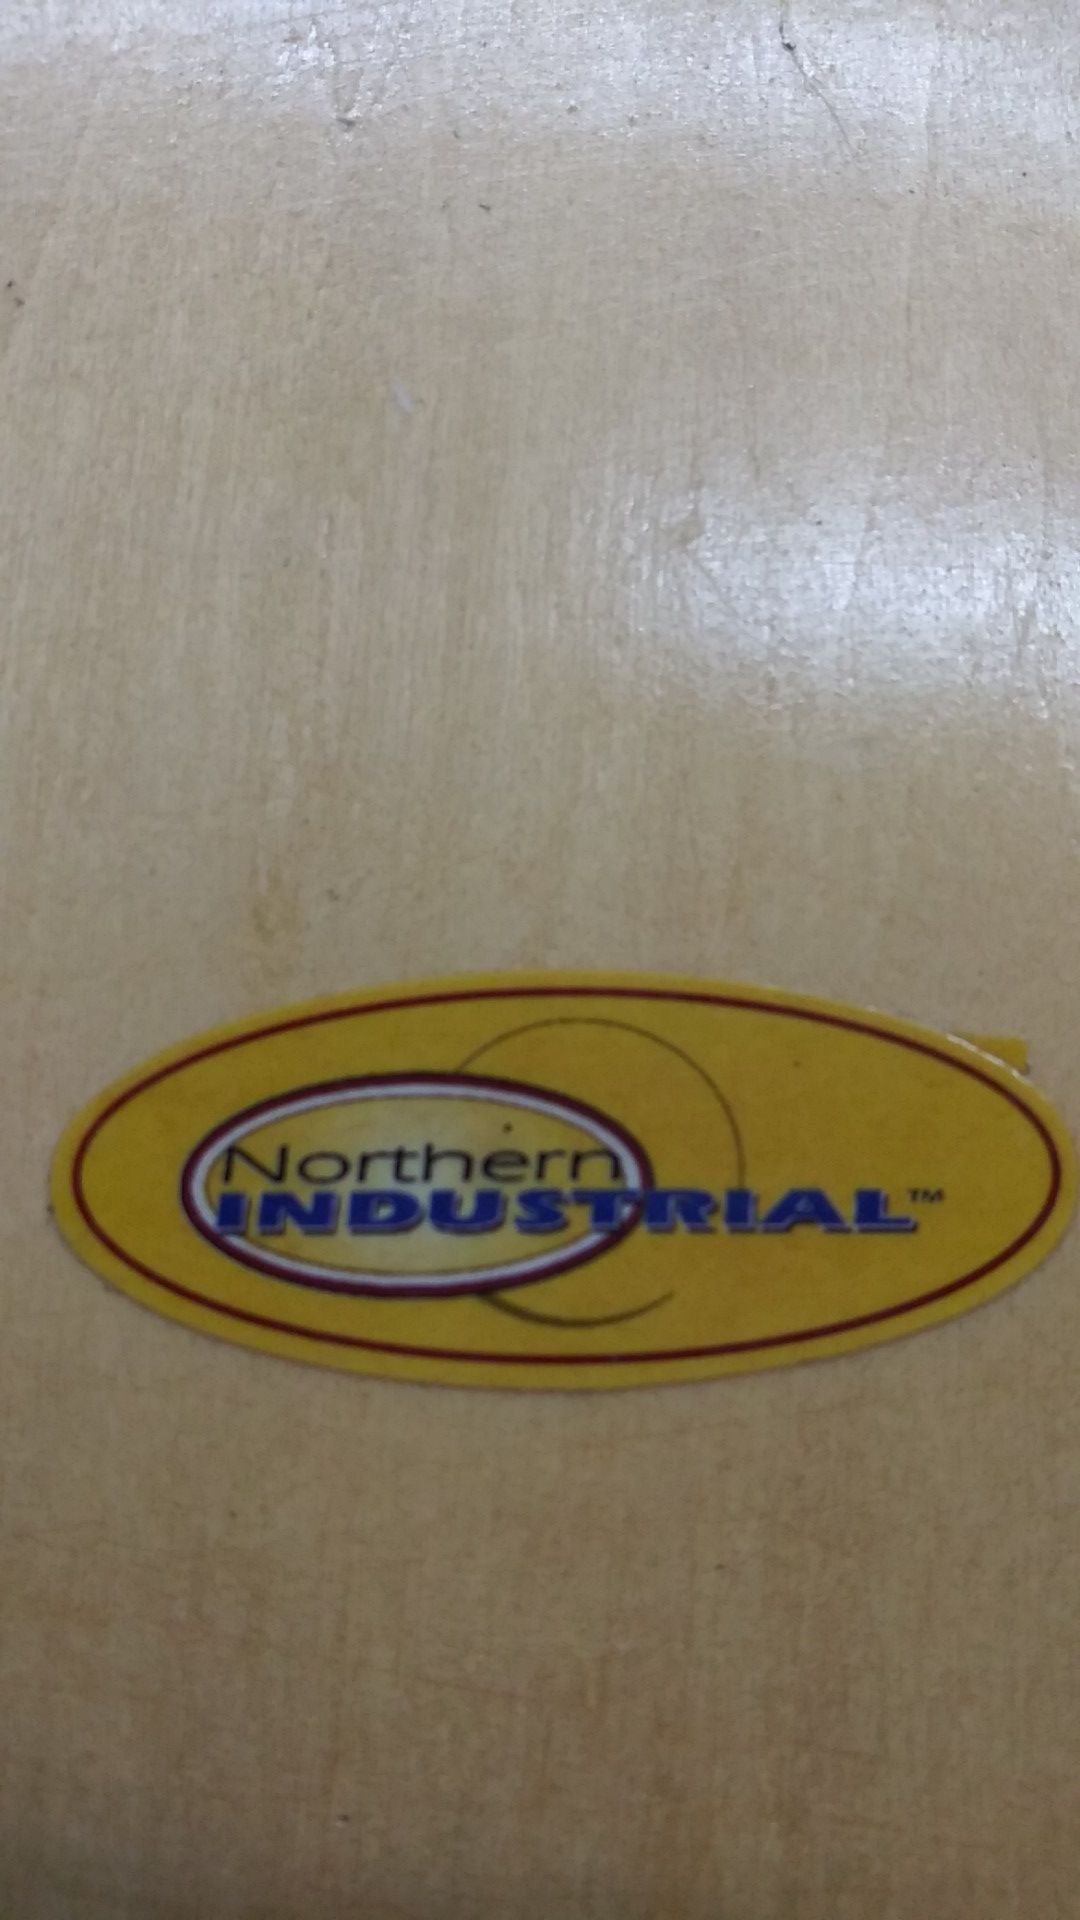 Northern Industrial drill bits